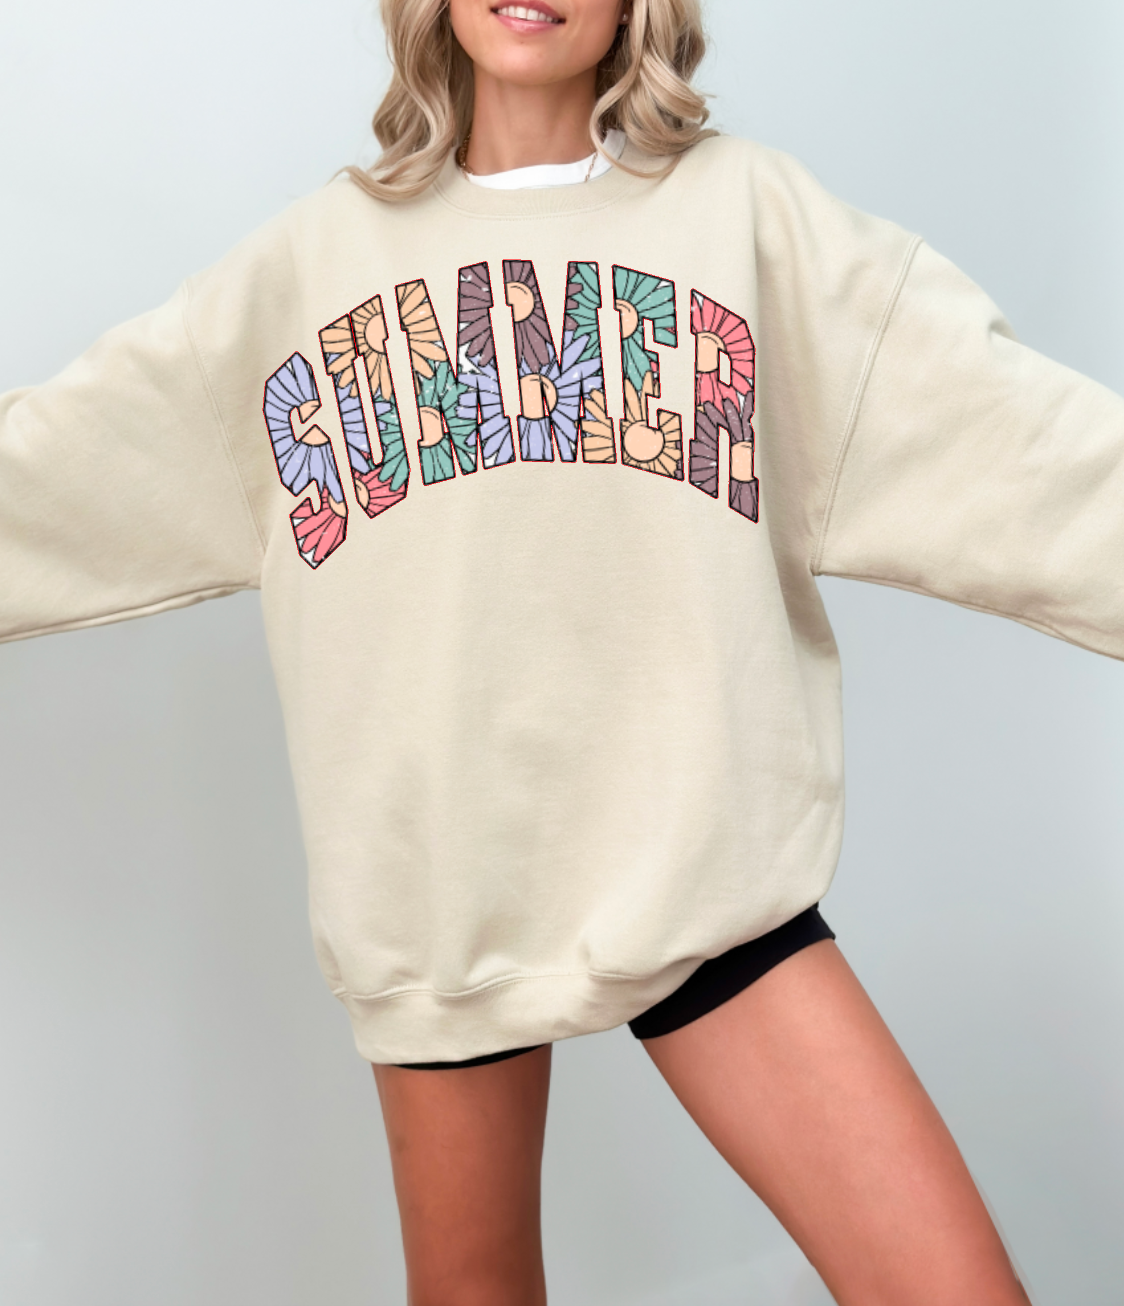 Summer Crewneck Sweatshirt